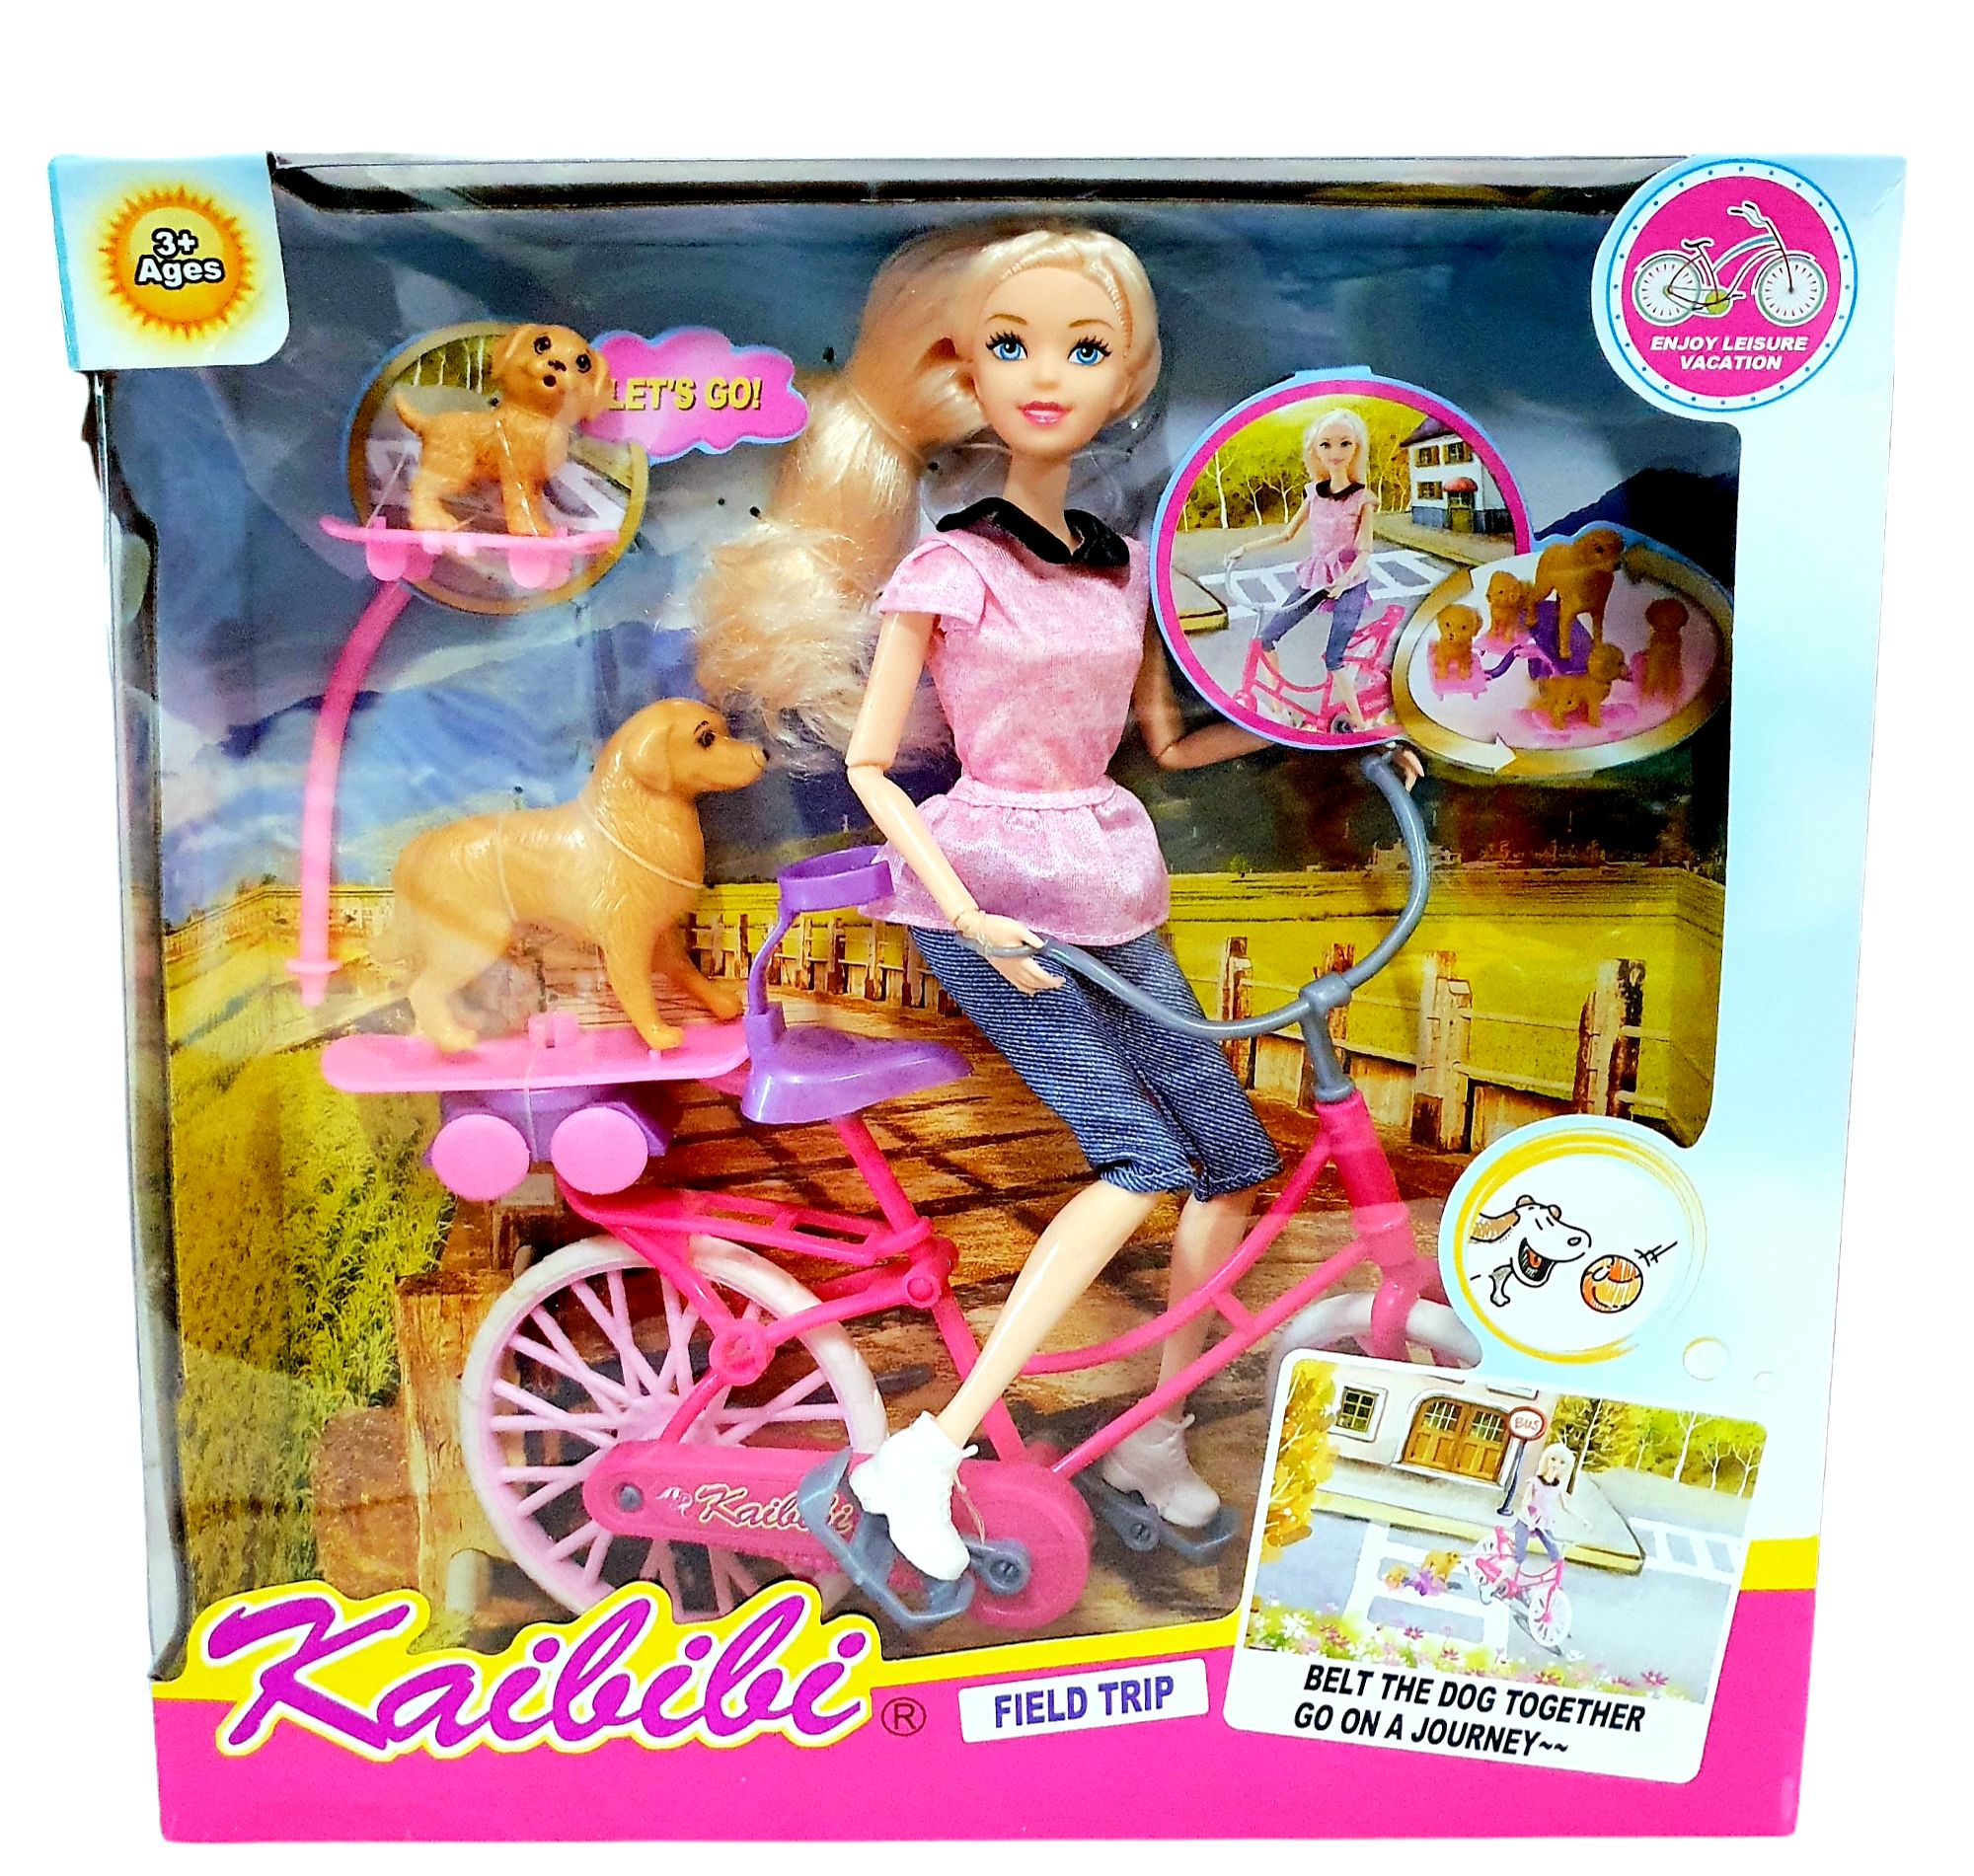 Doll Kaibibi, With Accessories Art. 100977973 - Dolls - AliExpress